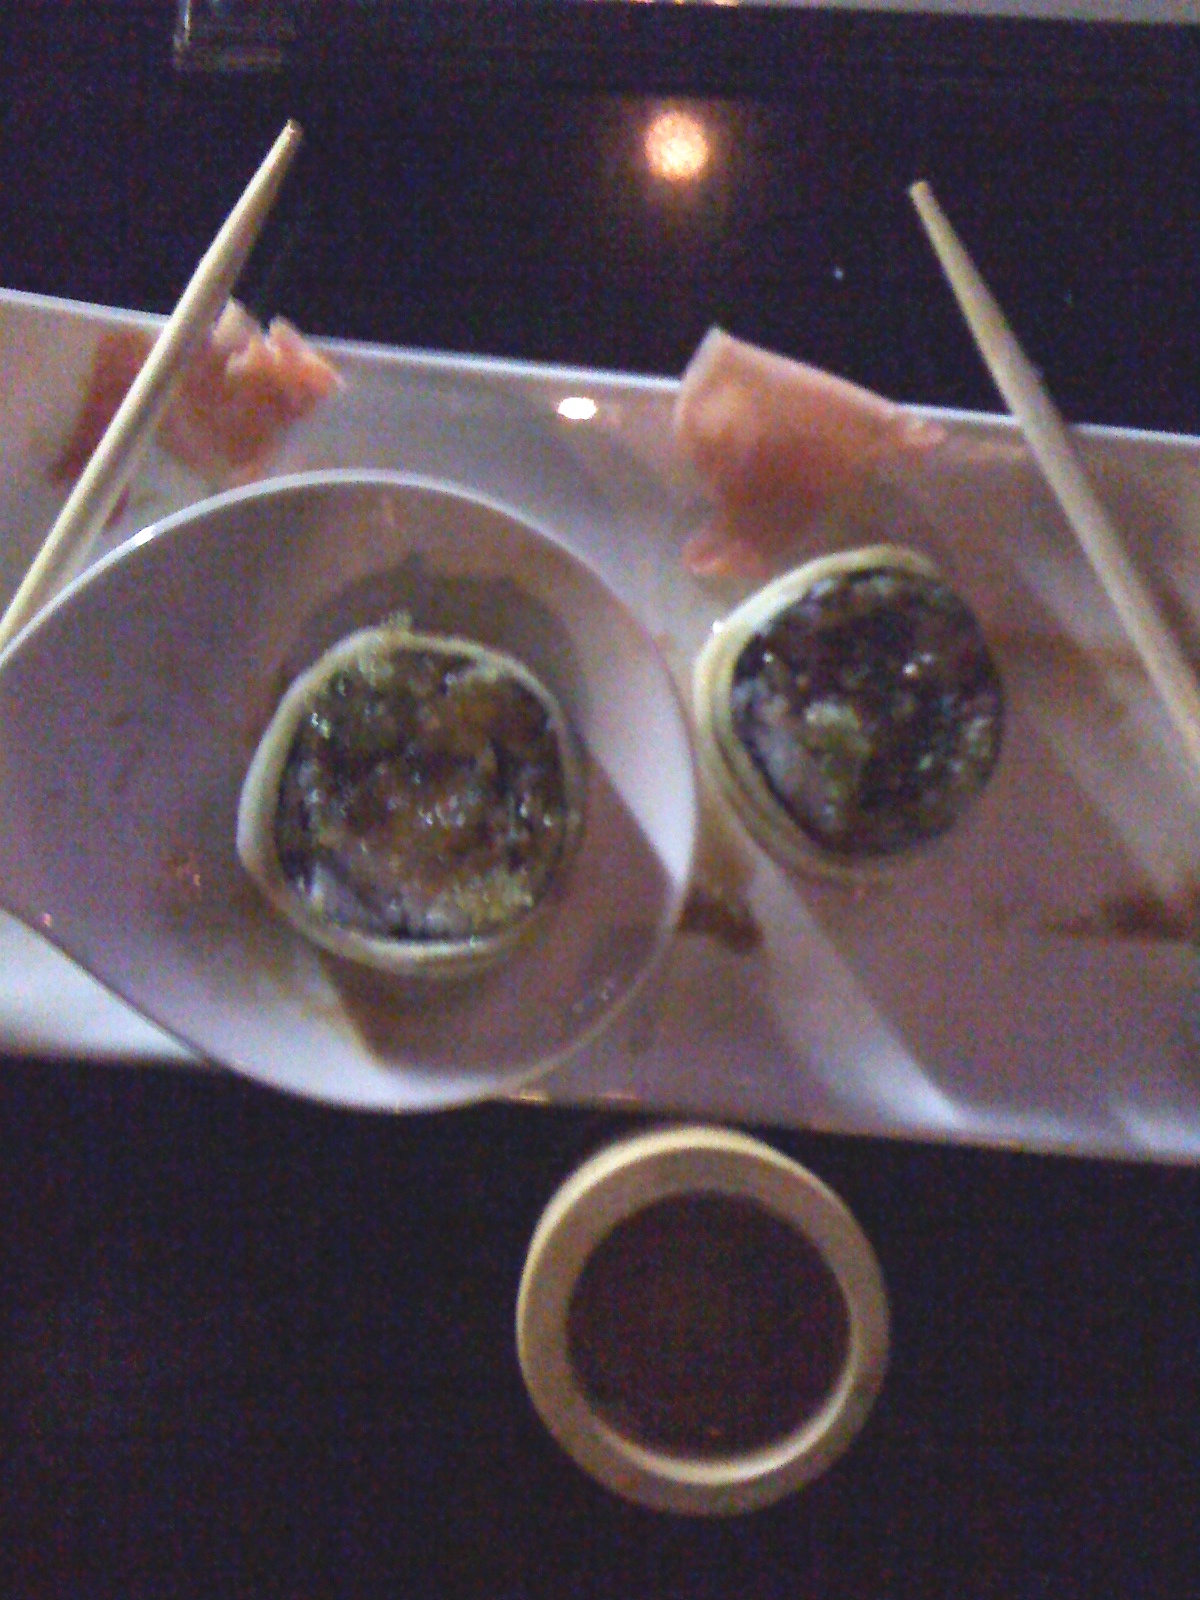 Sushi surpise face 1